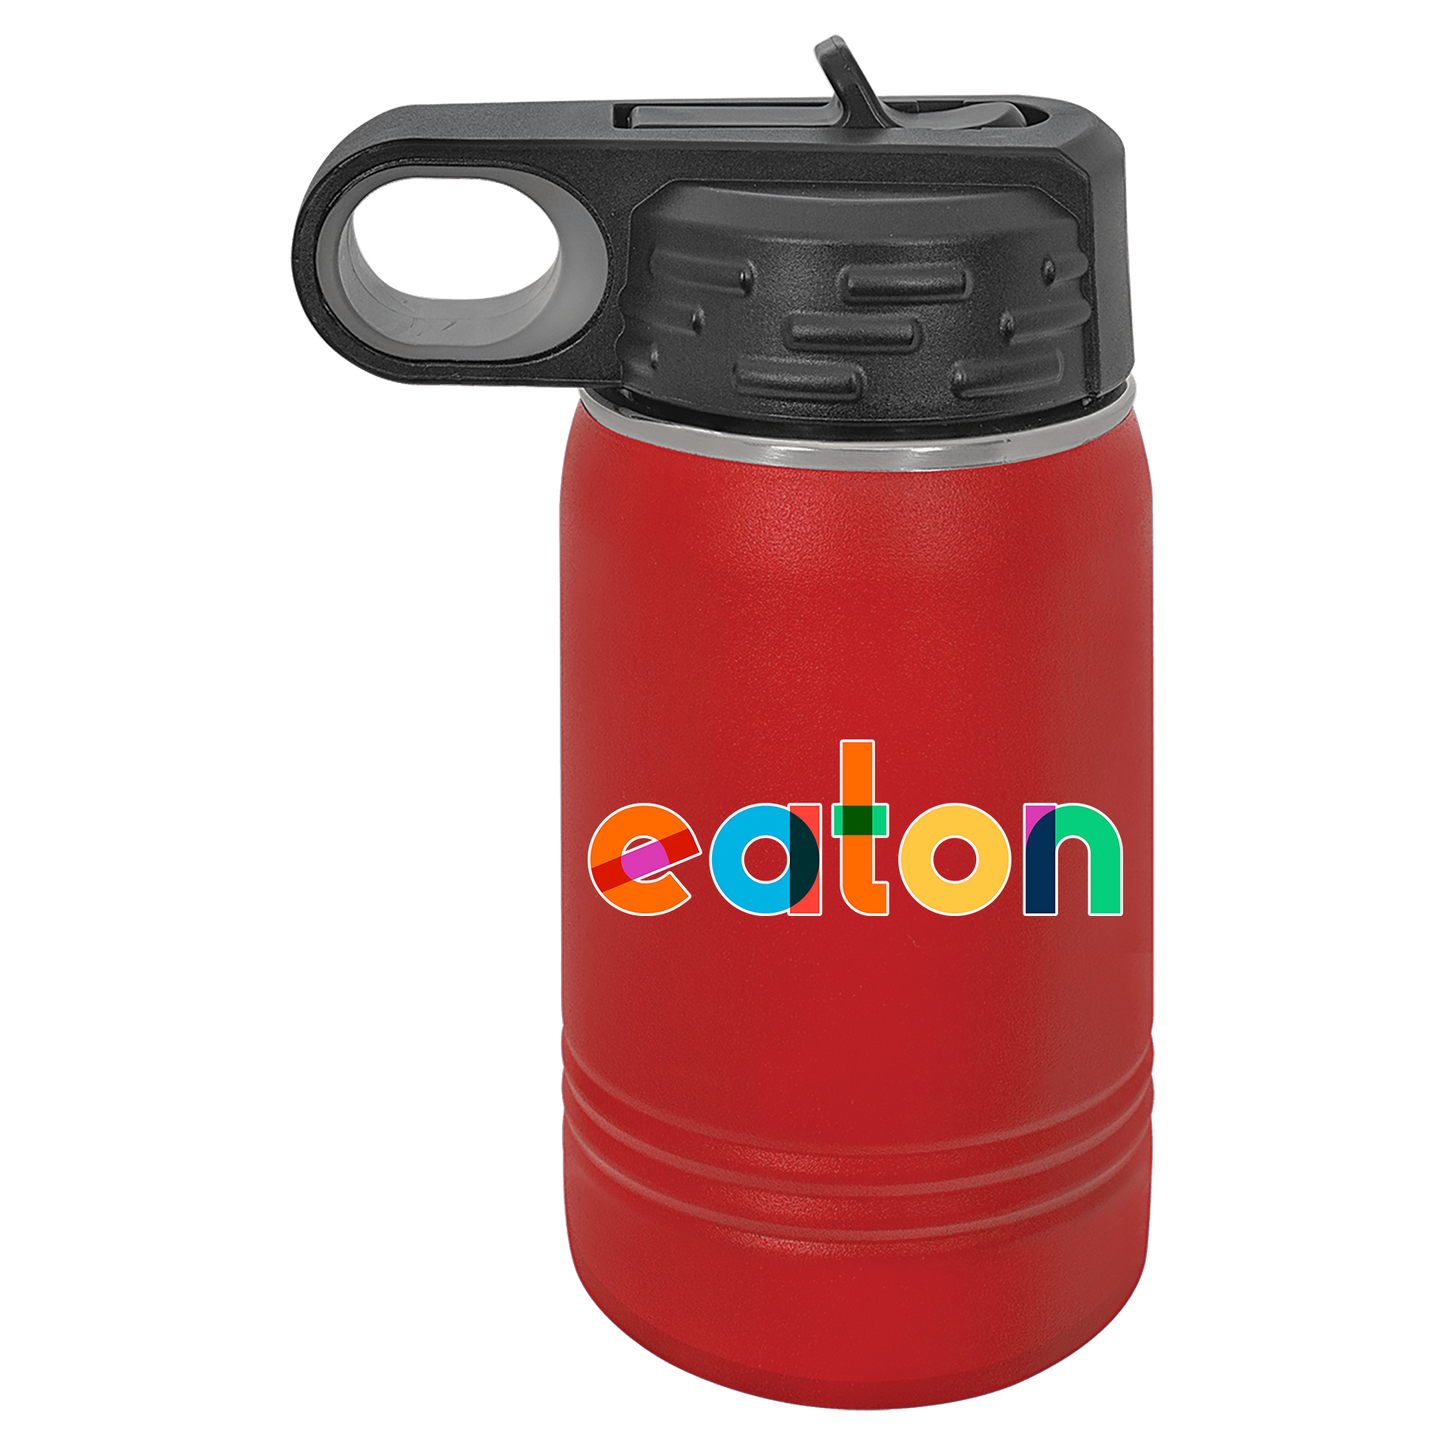 Colorful Eaton Water Bottle 12 oz